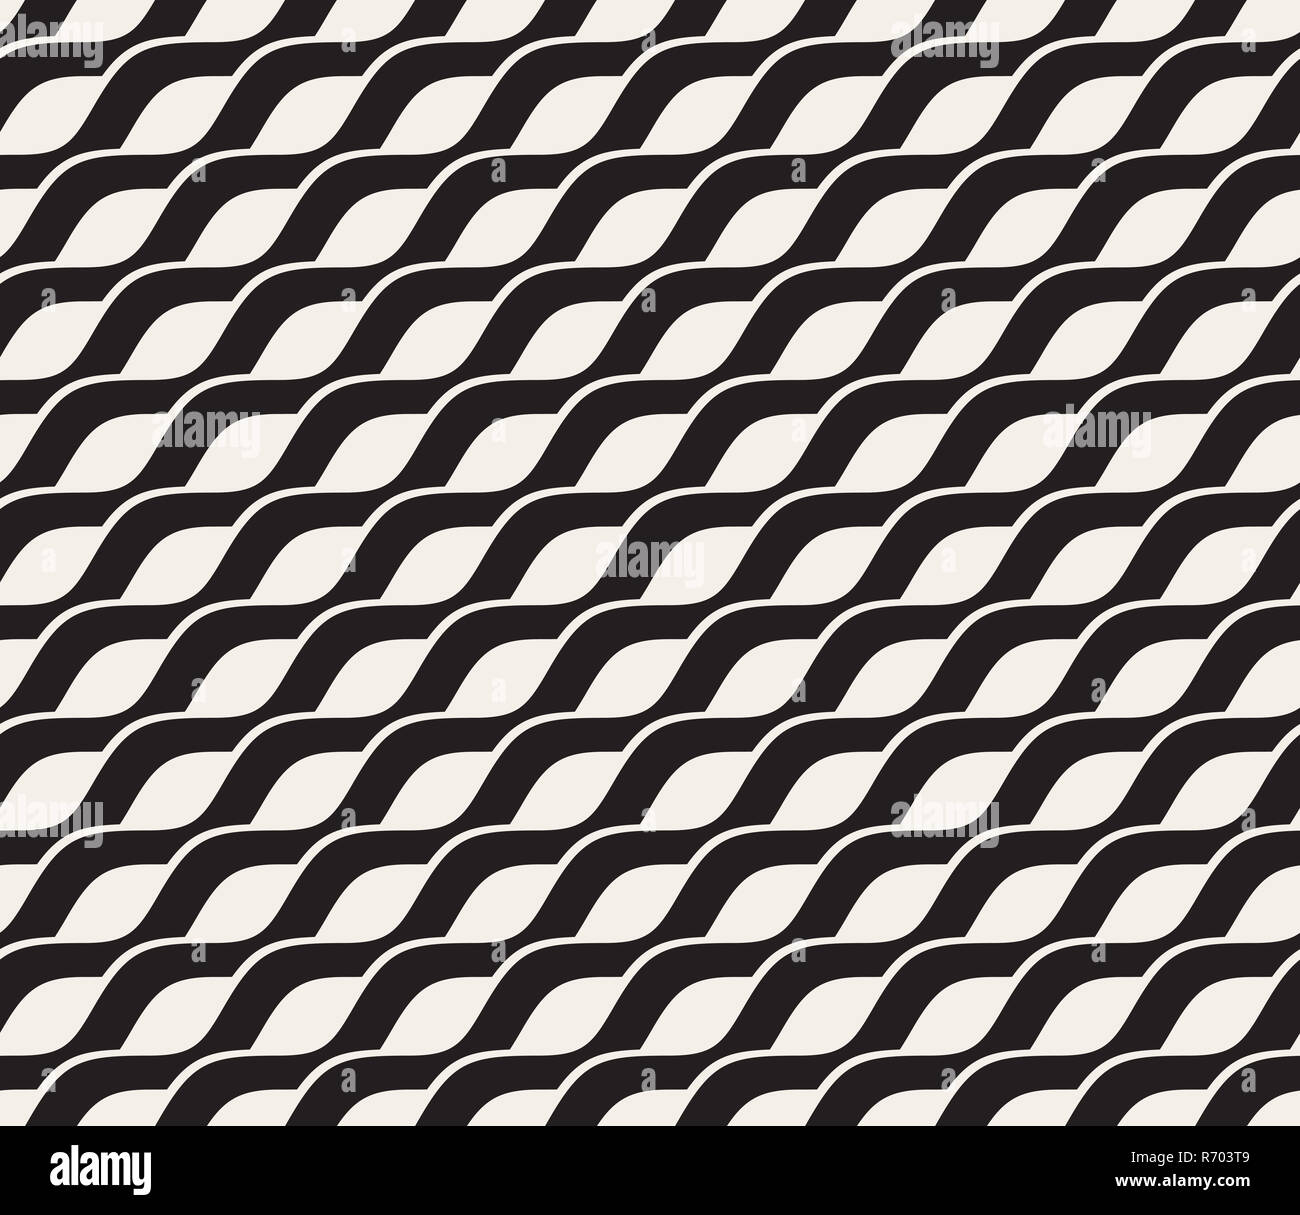 Vektor-nahtlose Black and White Interlacing Diagonalen Wellenlinien Muster Stockfoto